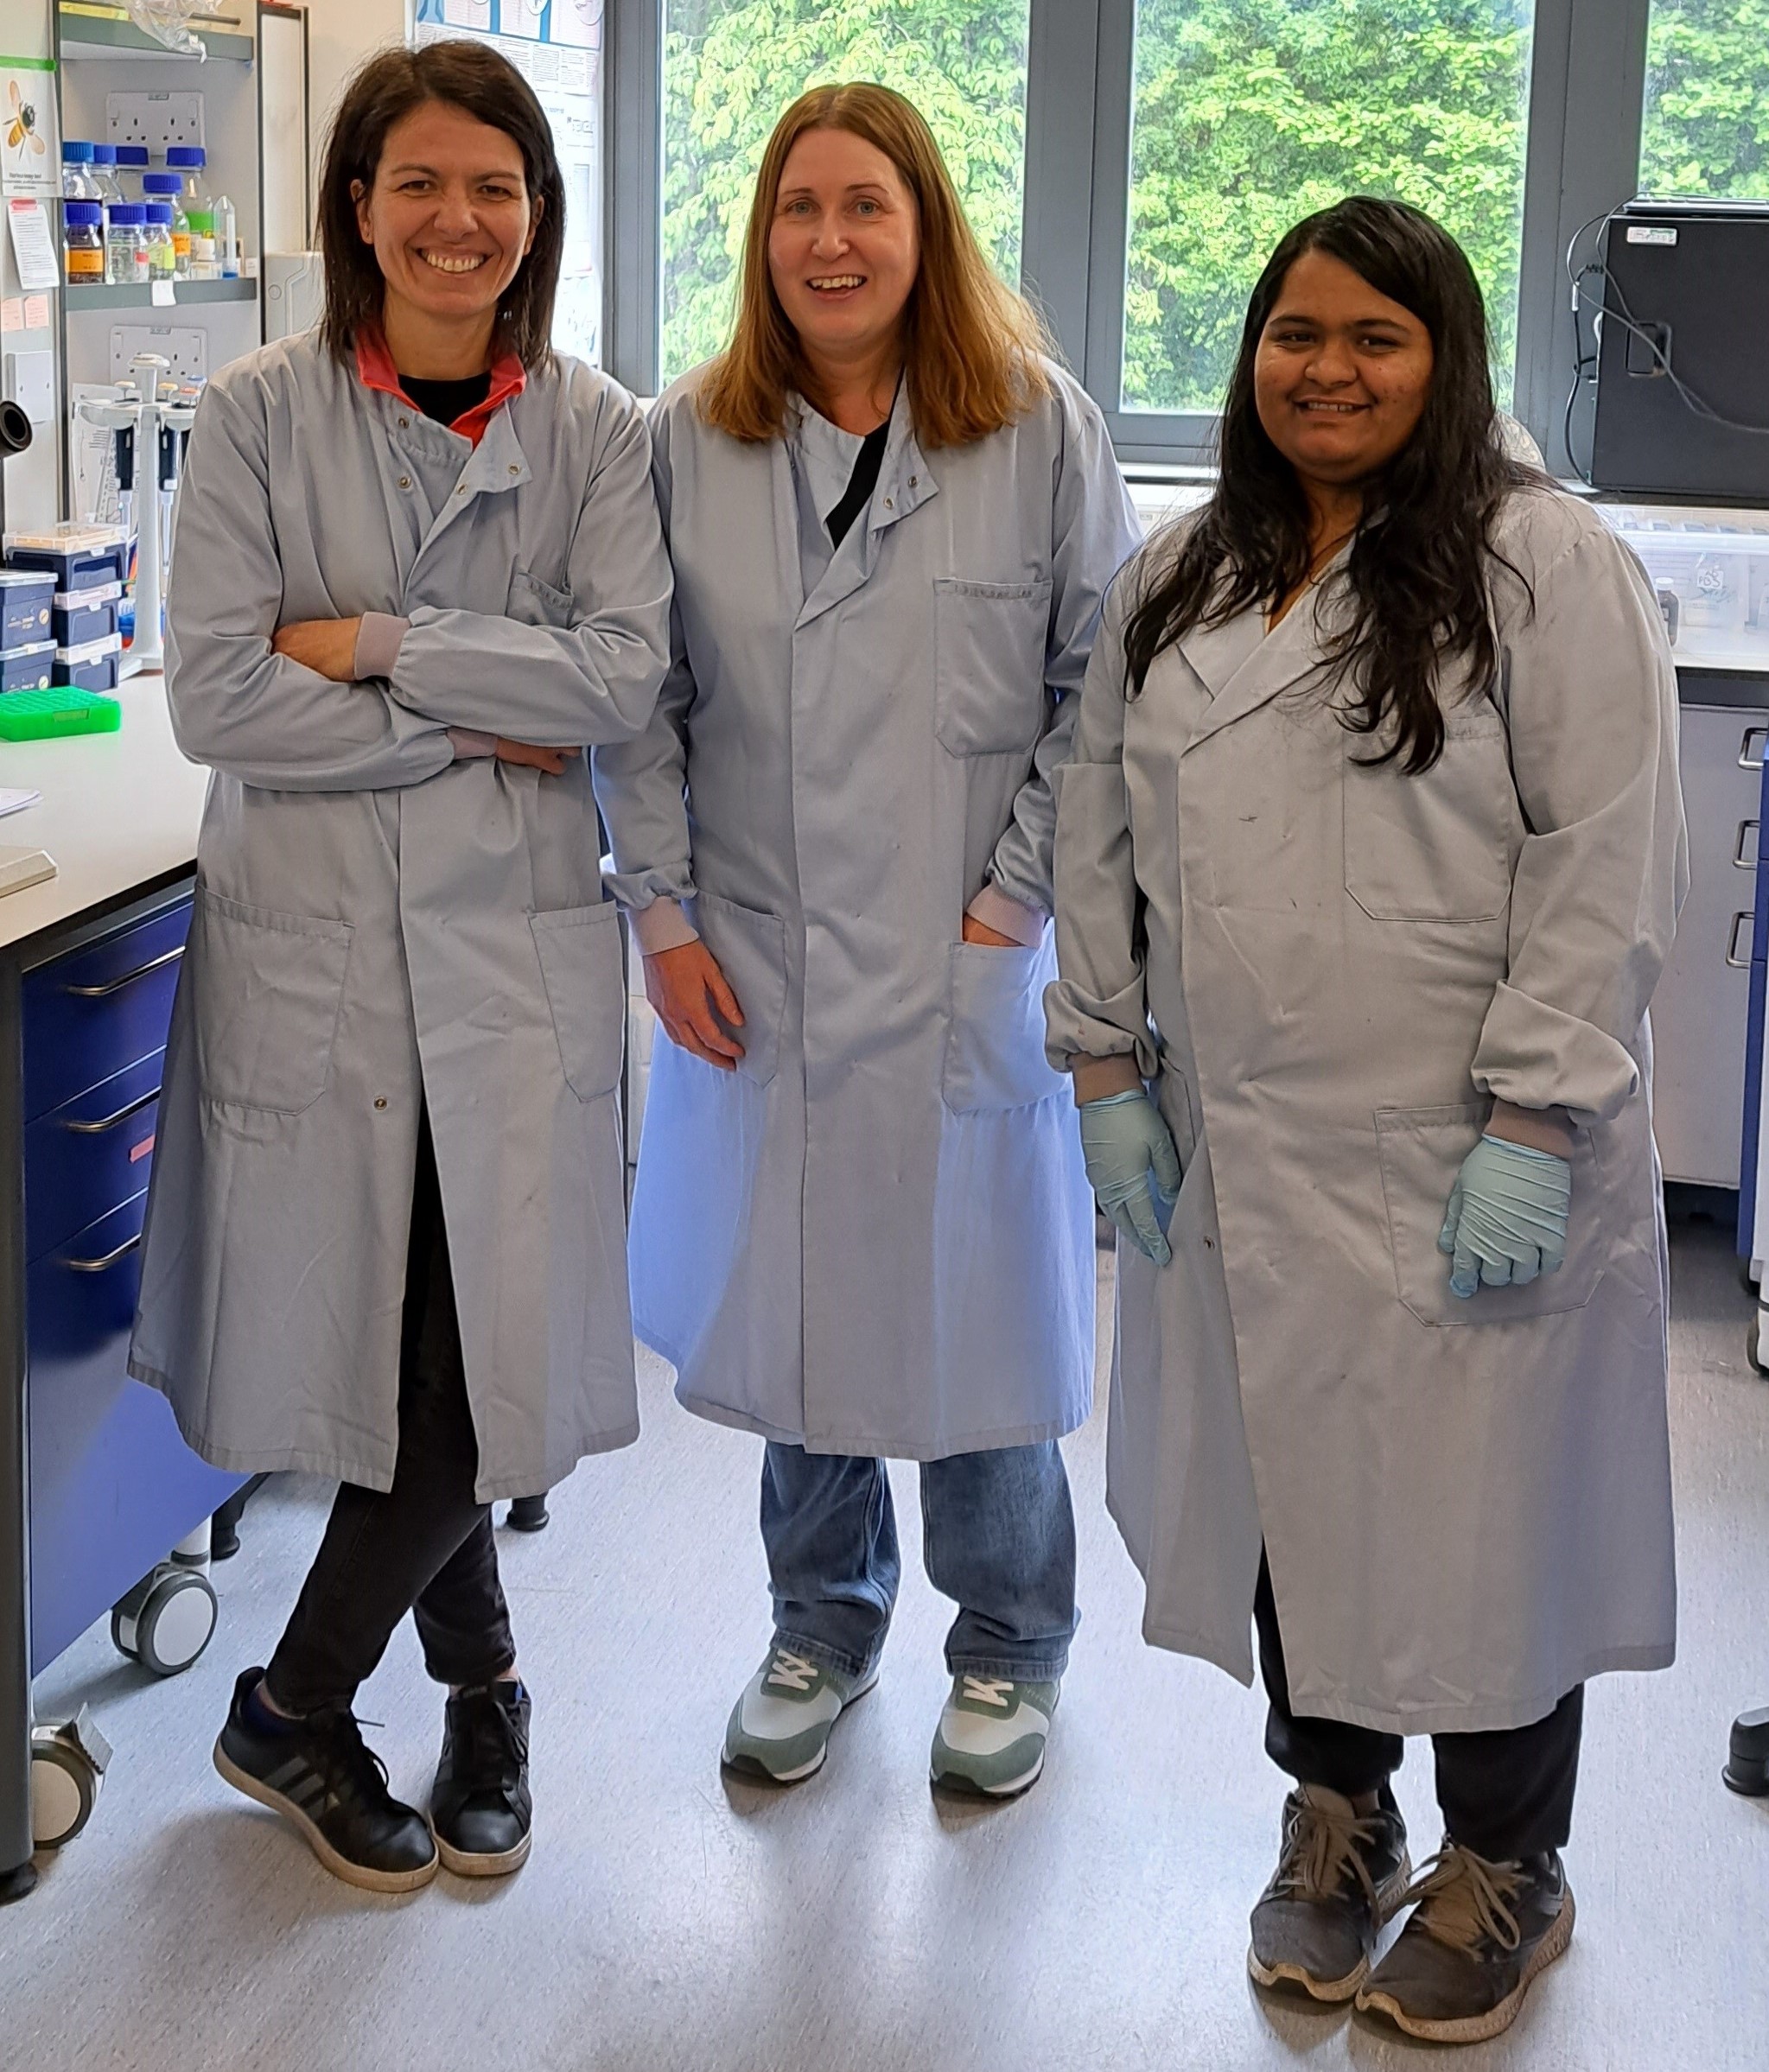 Pictured in the lab are (l-r) Amanda MacCallum, Samanta Mariani and Samidha Kulkarni.